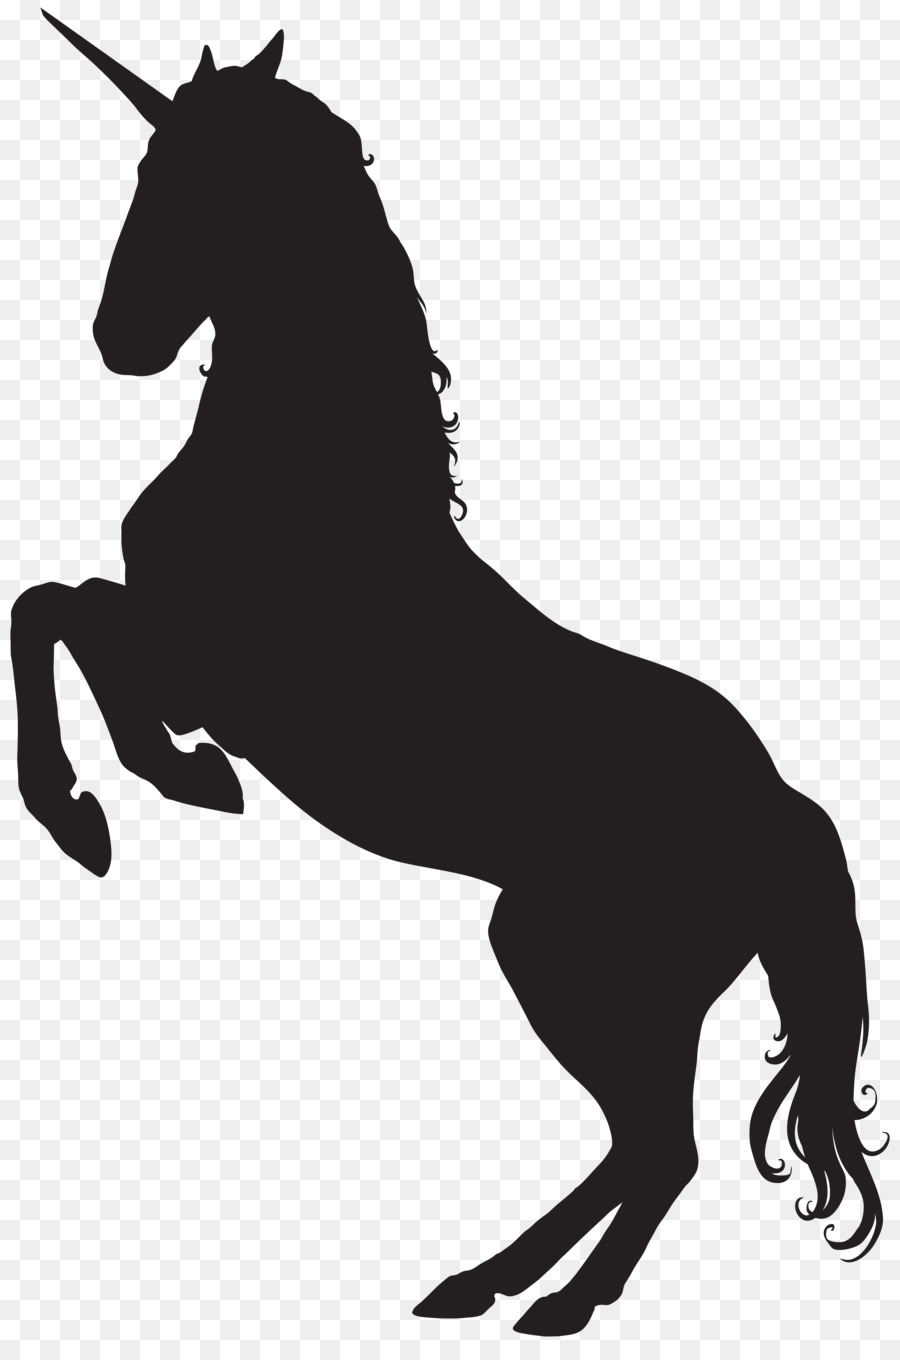 Unicorn Silhouette Clip art - unicorn png download - 5373*8000 - Free Transparent Unicorn png Download.